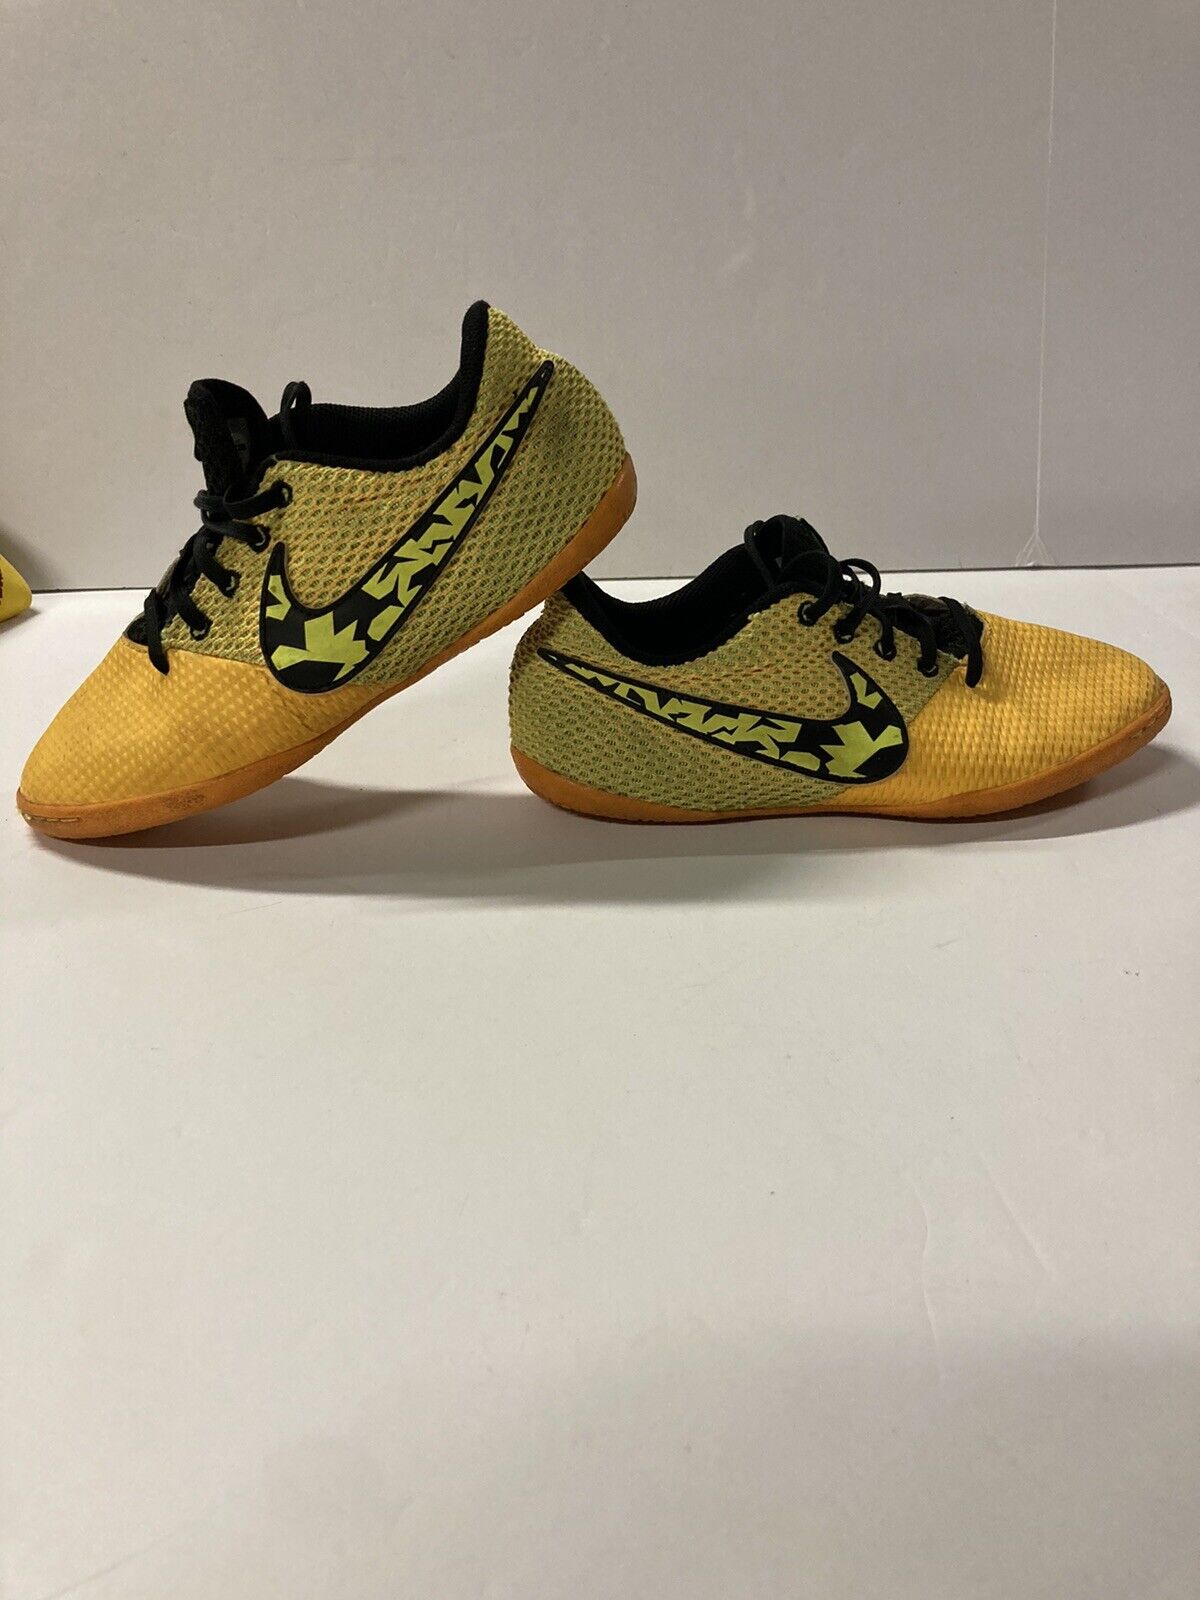 NIKE Mens Elastico Pro III IC Soccer Shoes Size 5.5Y Multicolor Boys Youth | eBay